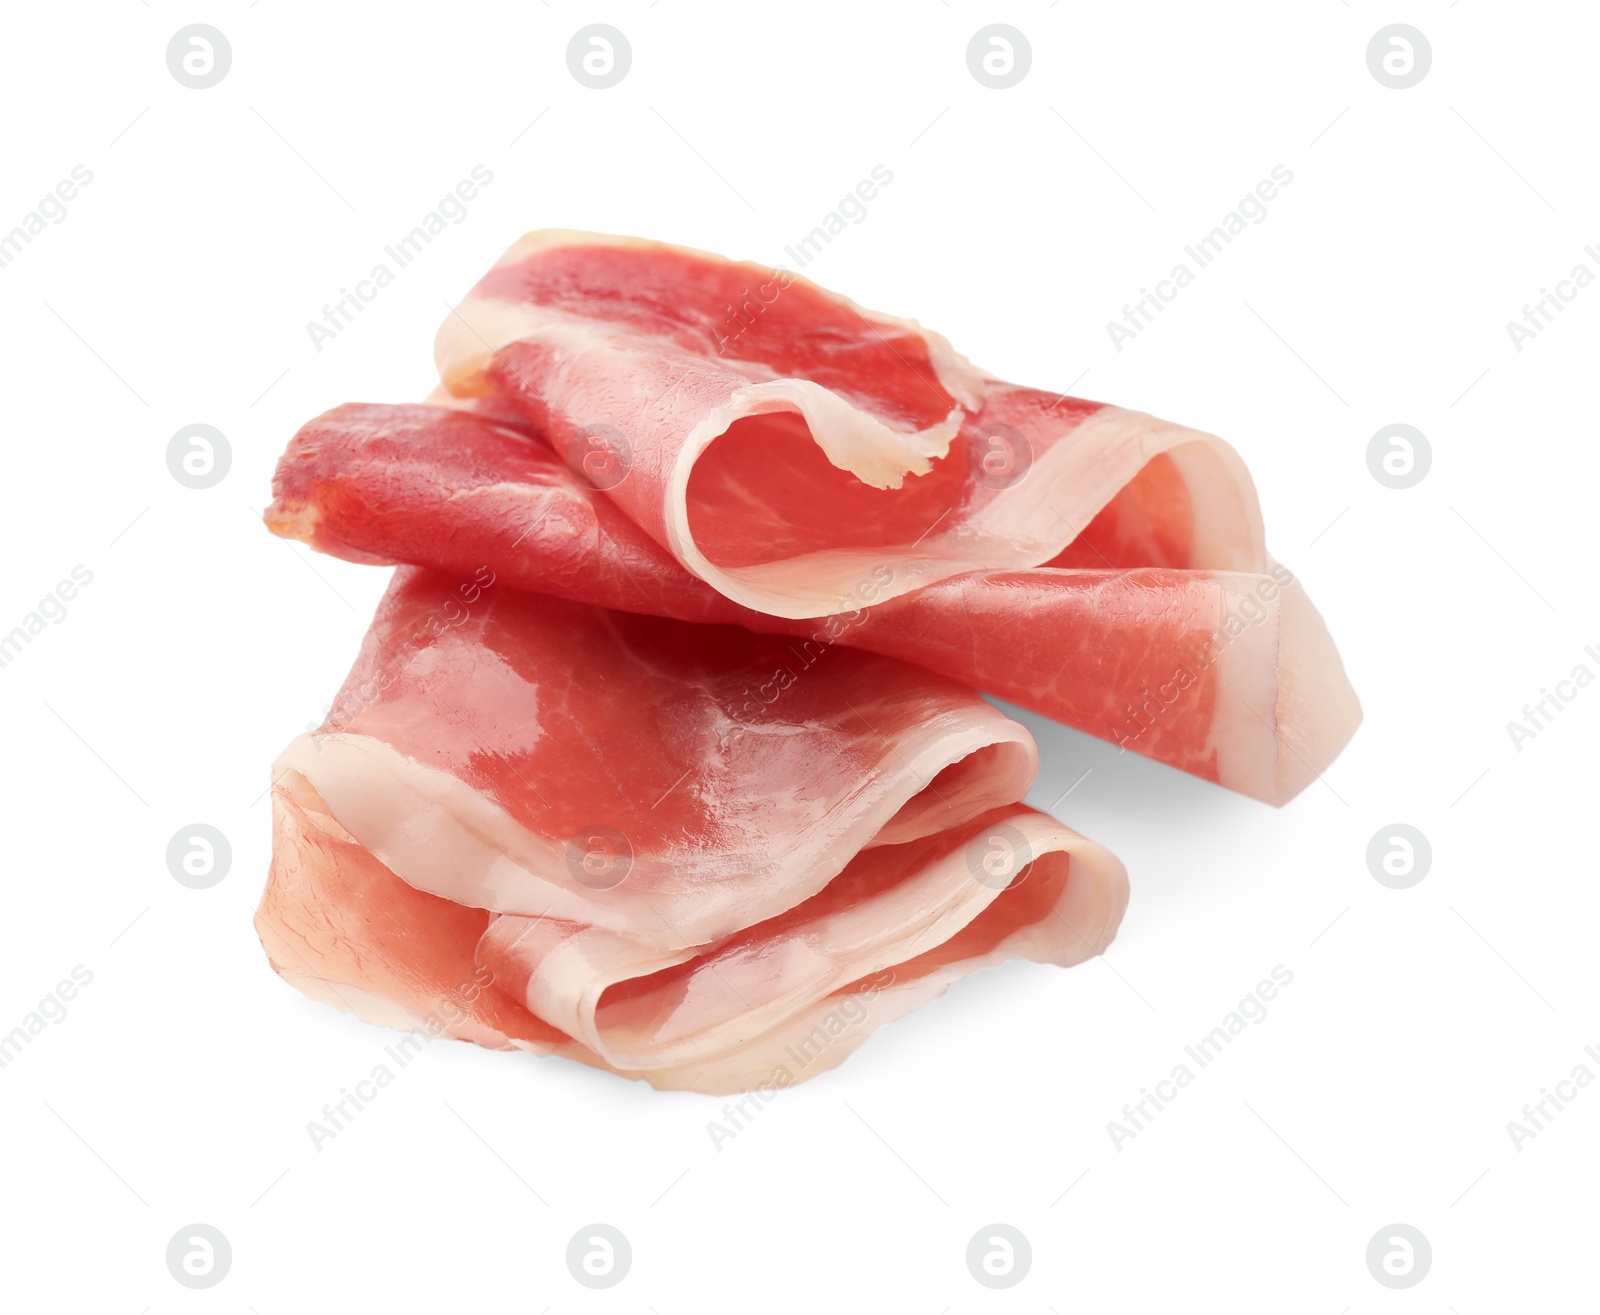 Photo of Slices of delicious jamon on white background